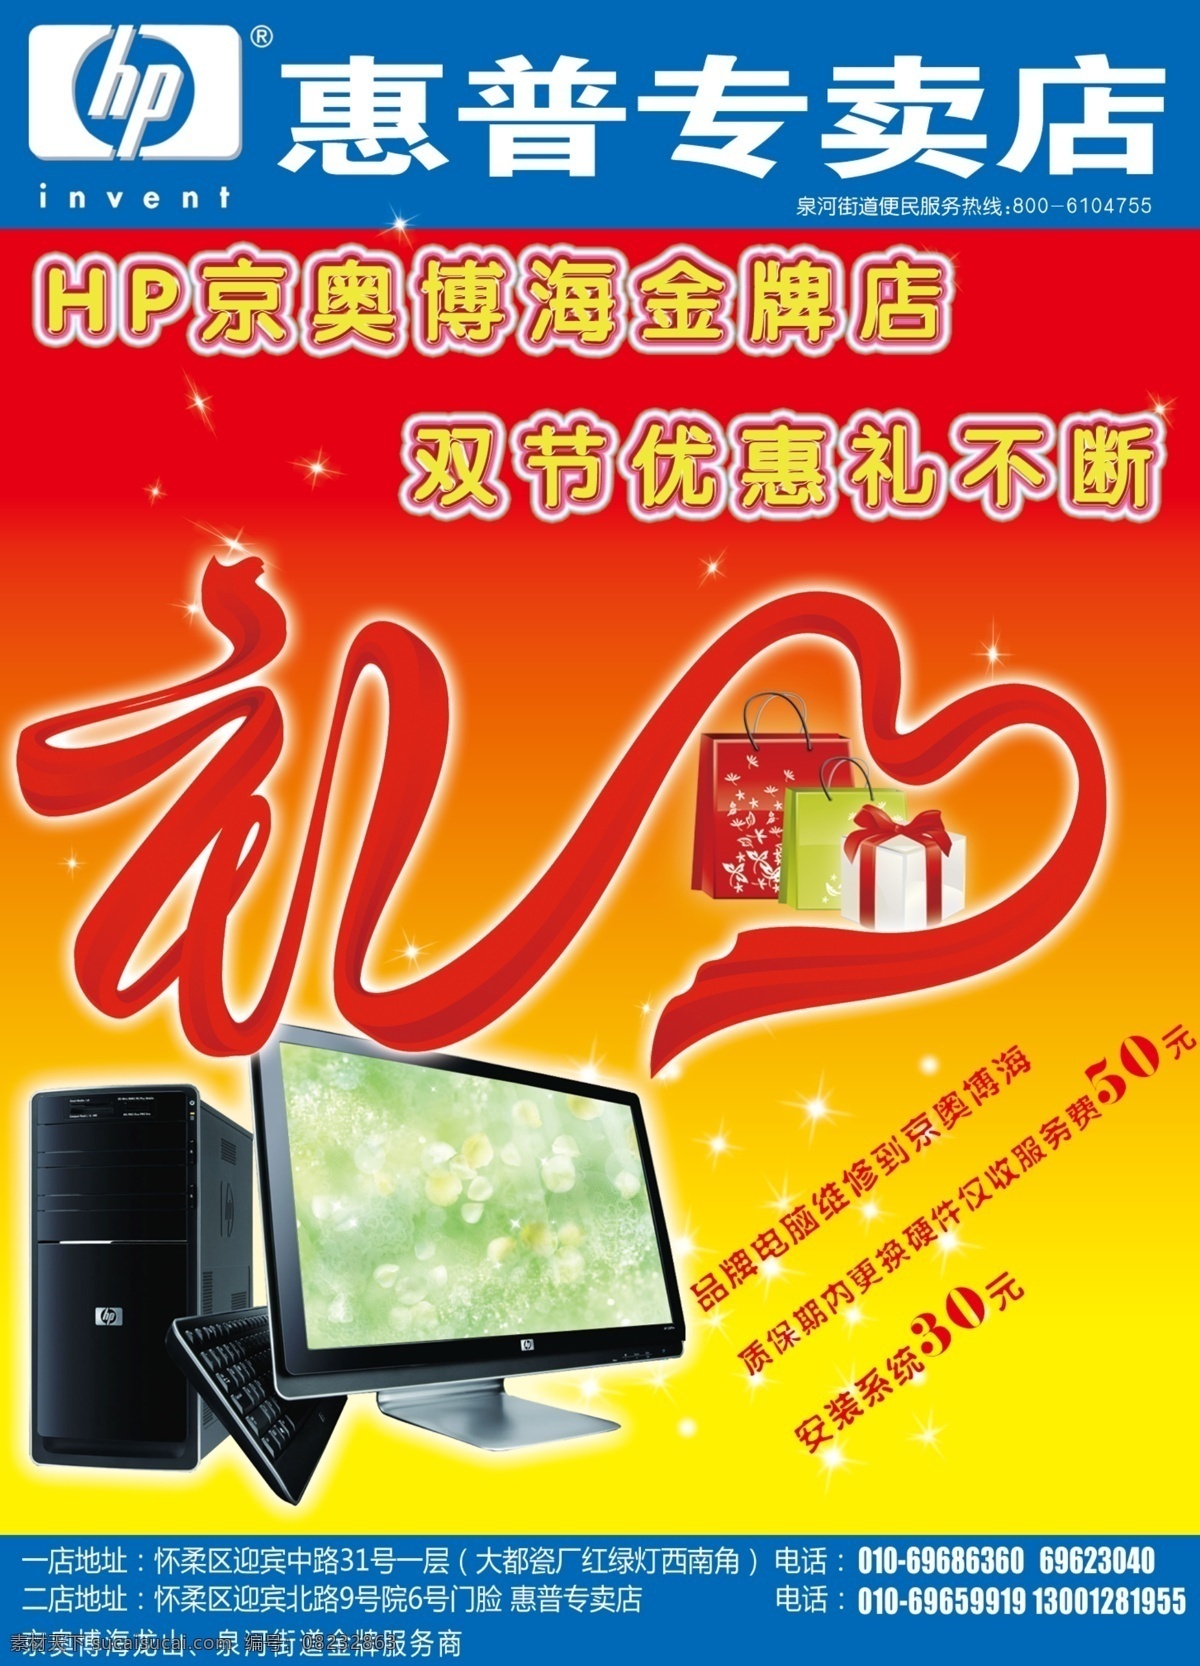 hp 惠普电脑 电脑广告 电脑网络 分层psd 平面广告 设计素材 平面模板 psd源文件 红色